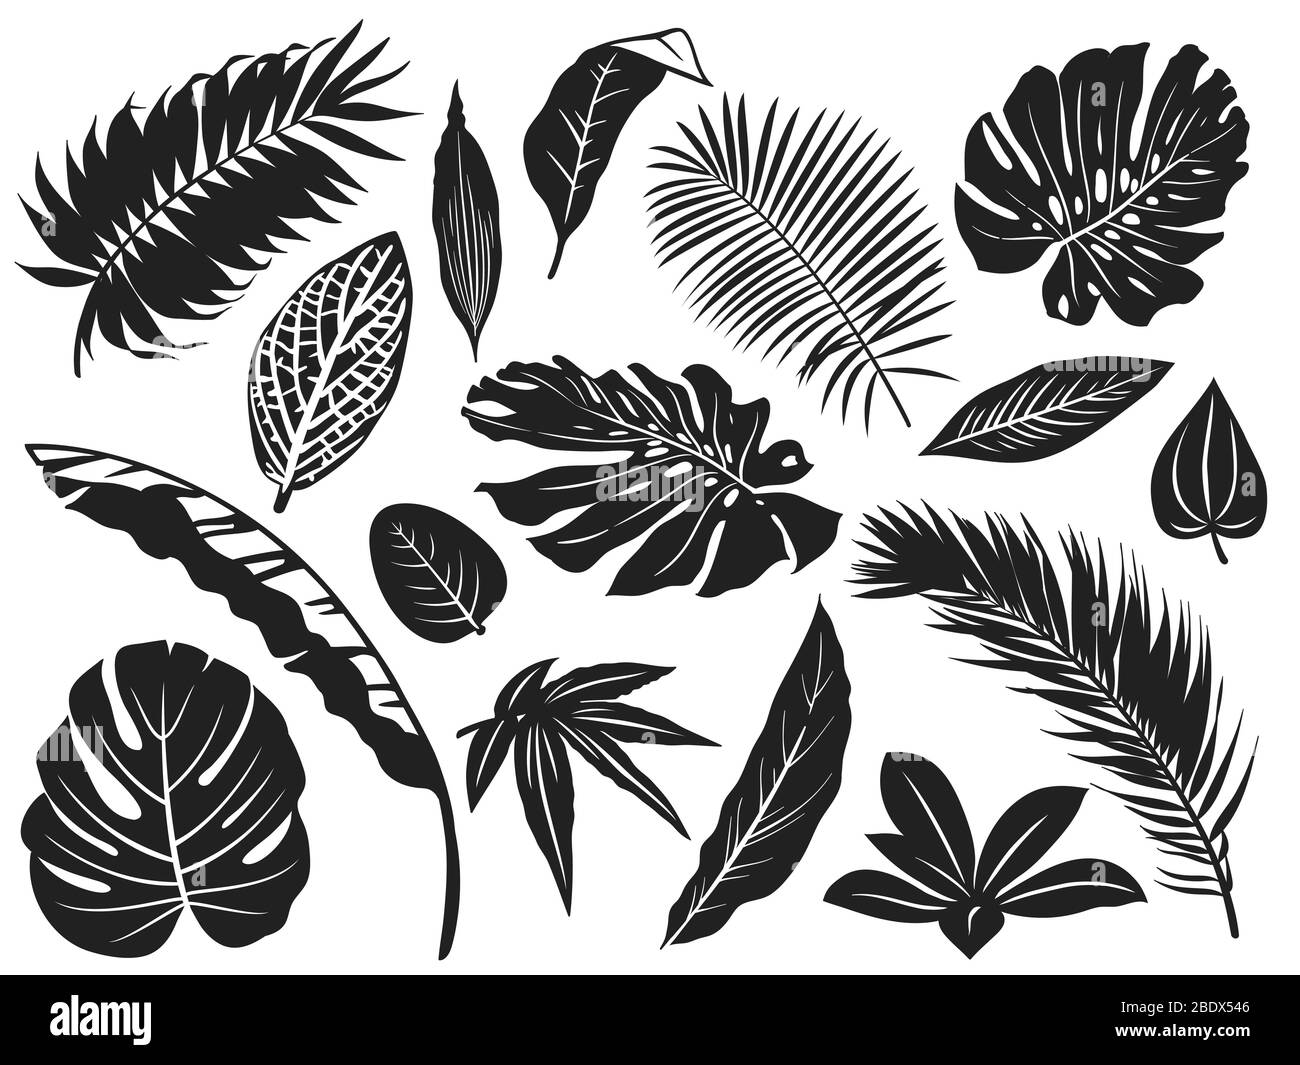 Tropische Blätter Silhouette. Palmblatt, Kokospalmen und Monstera Blätter schwarze Silhouetten Vektor-Illustration Set Stock Vektor